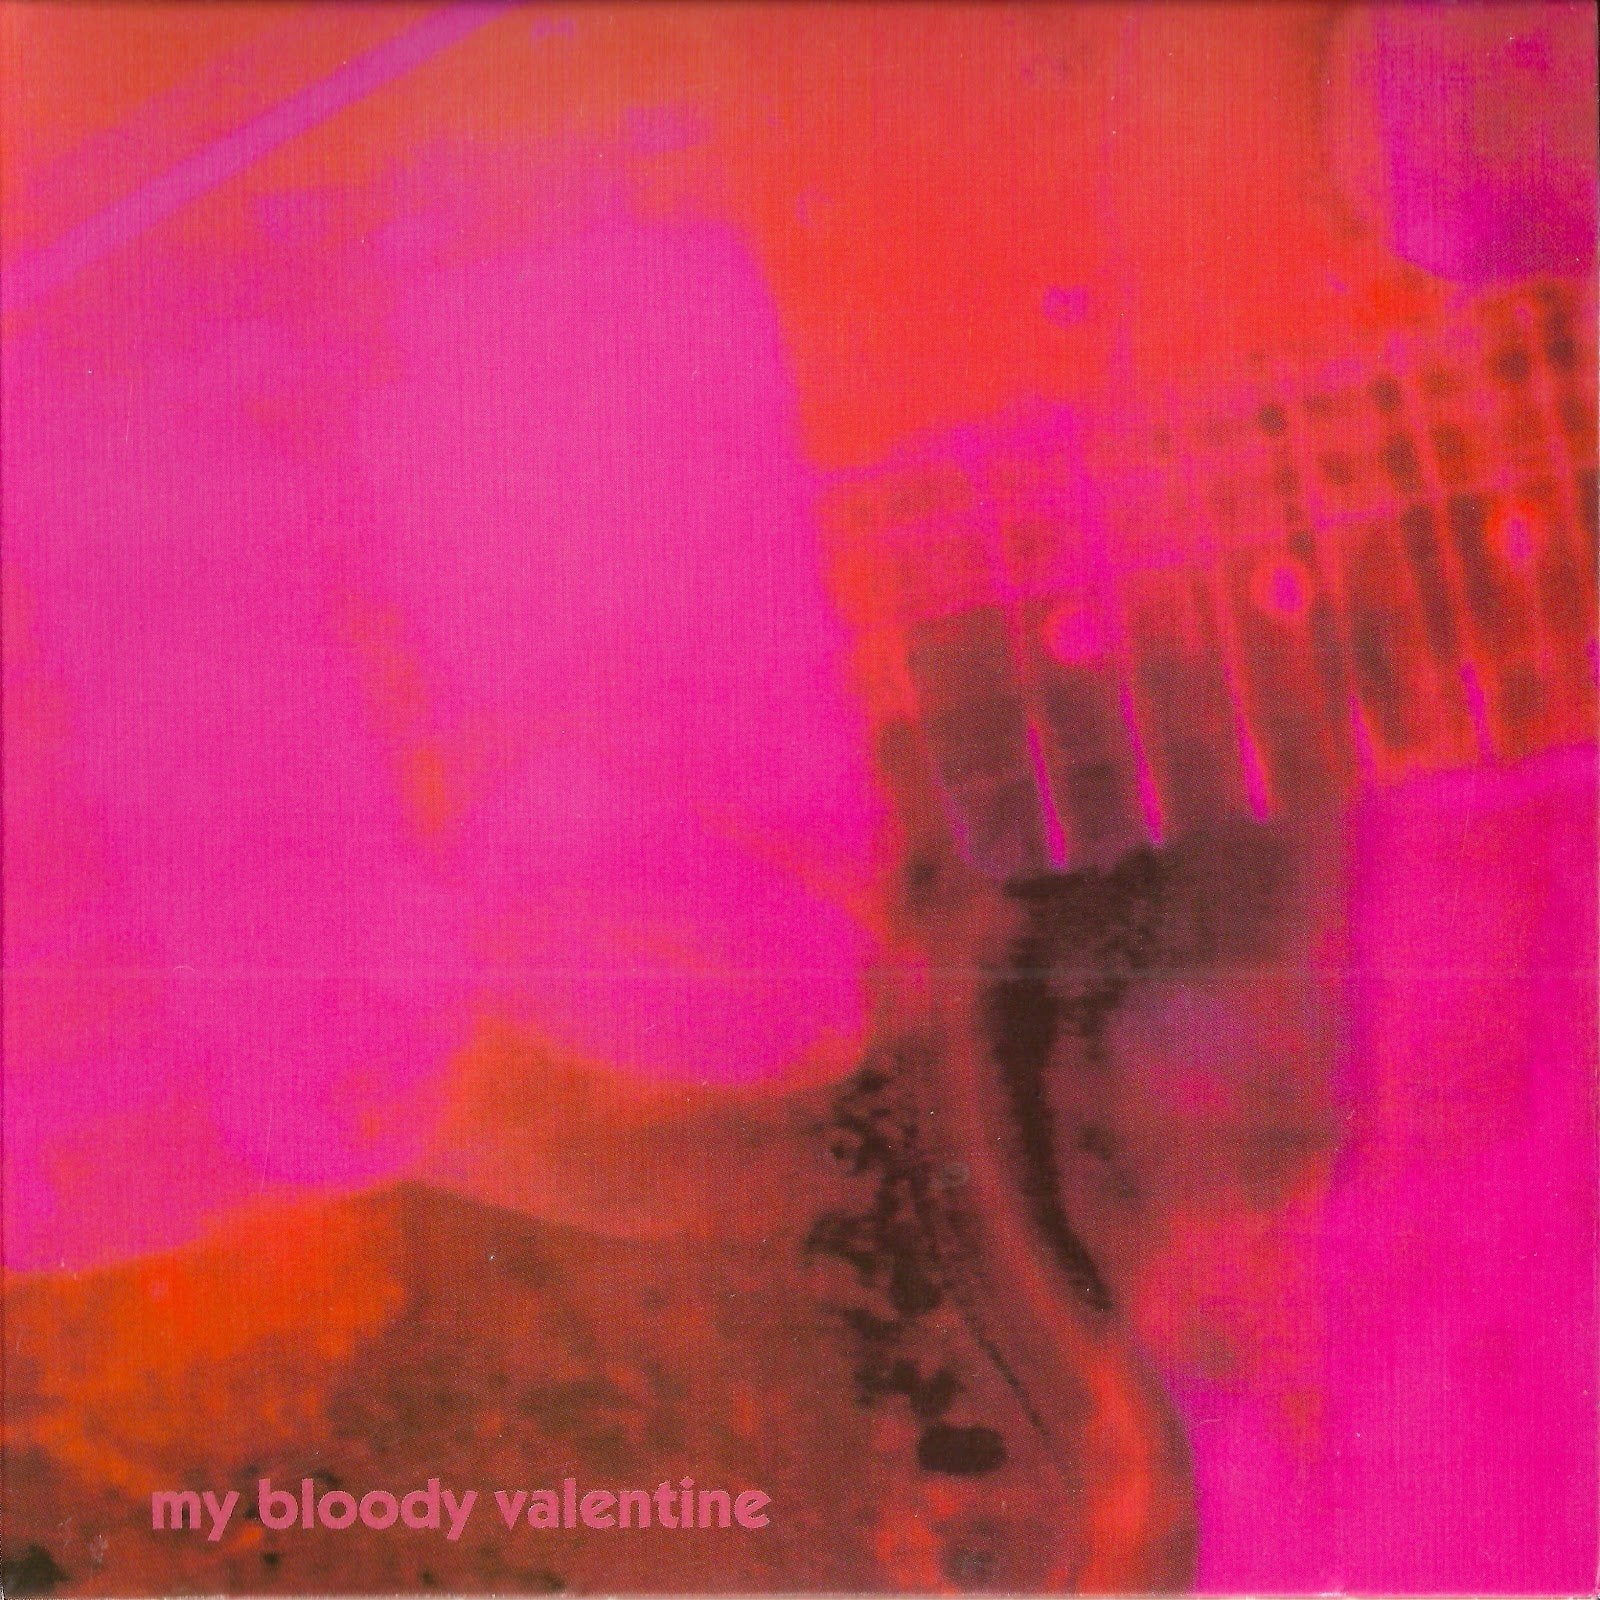 My Bloody Valentine "Loveless"